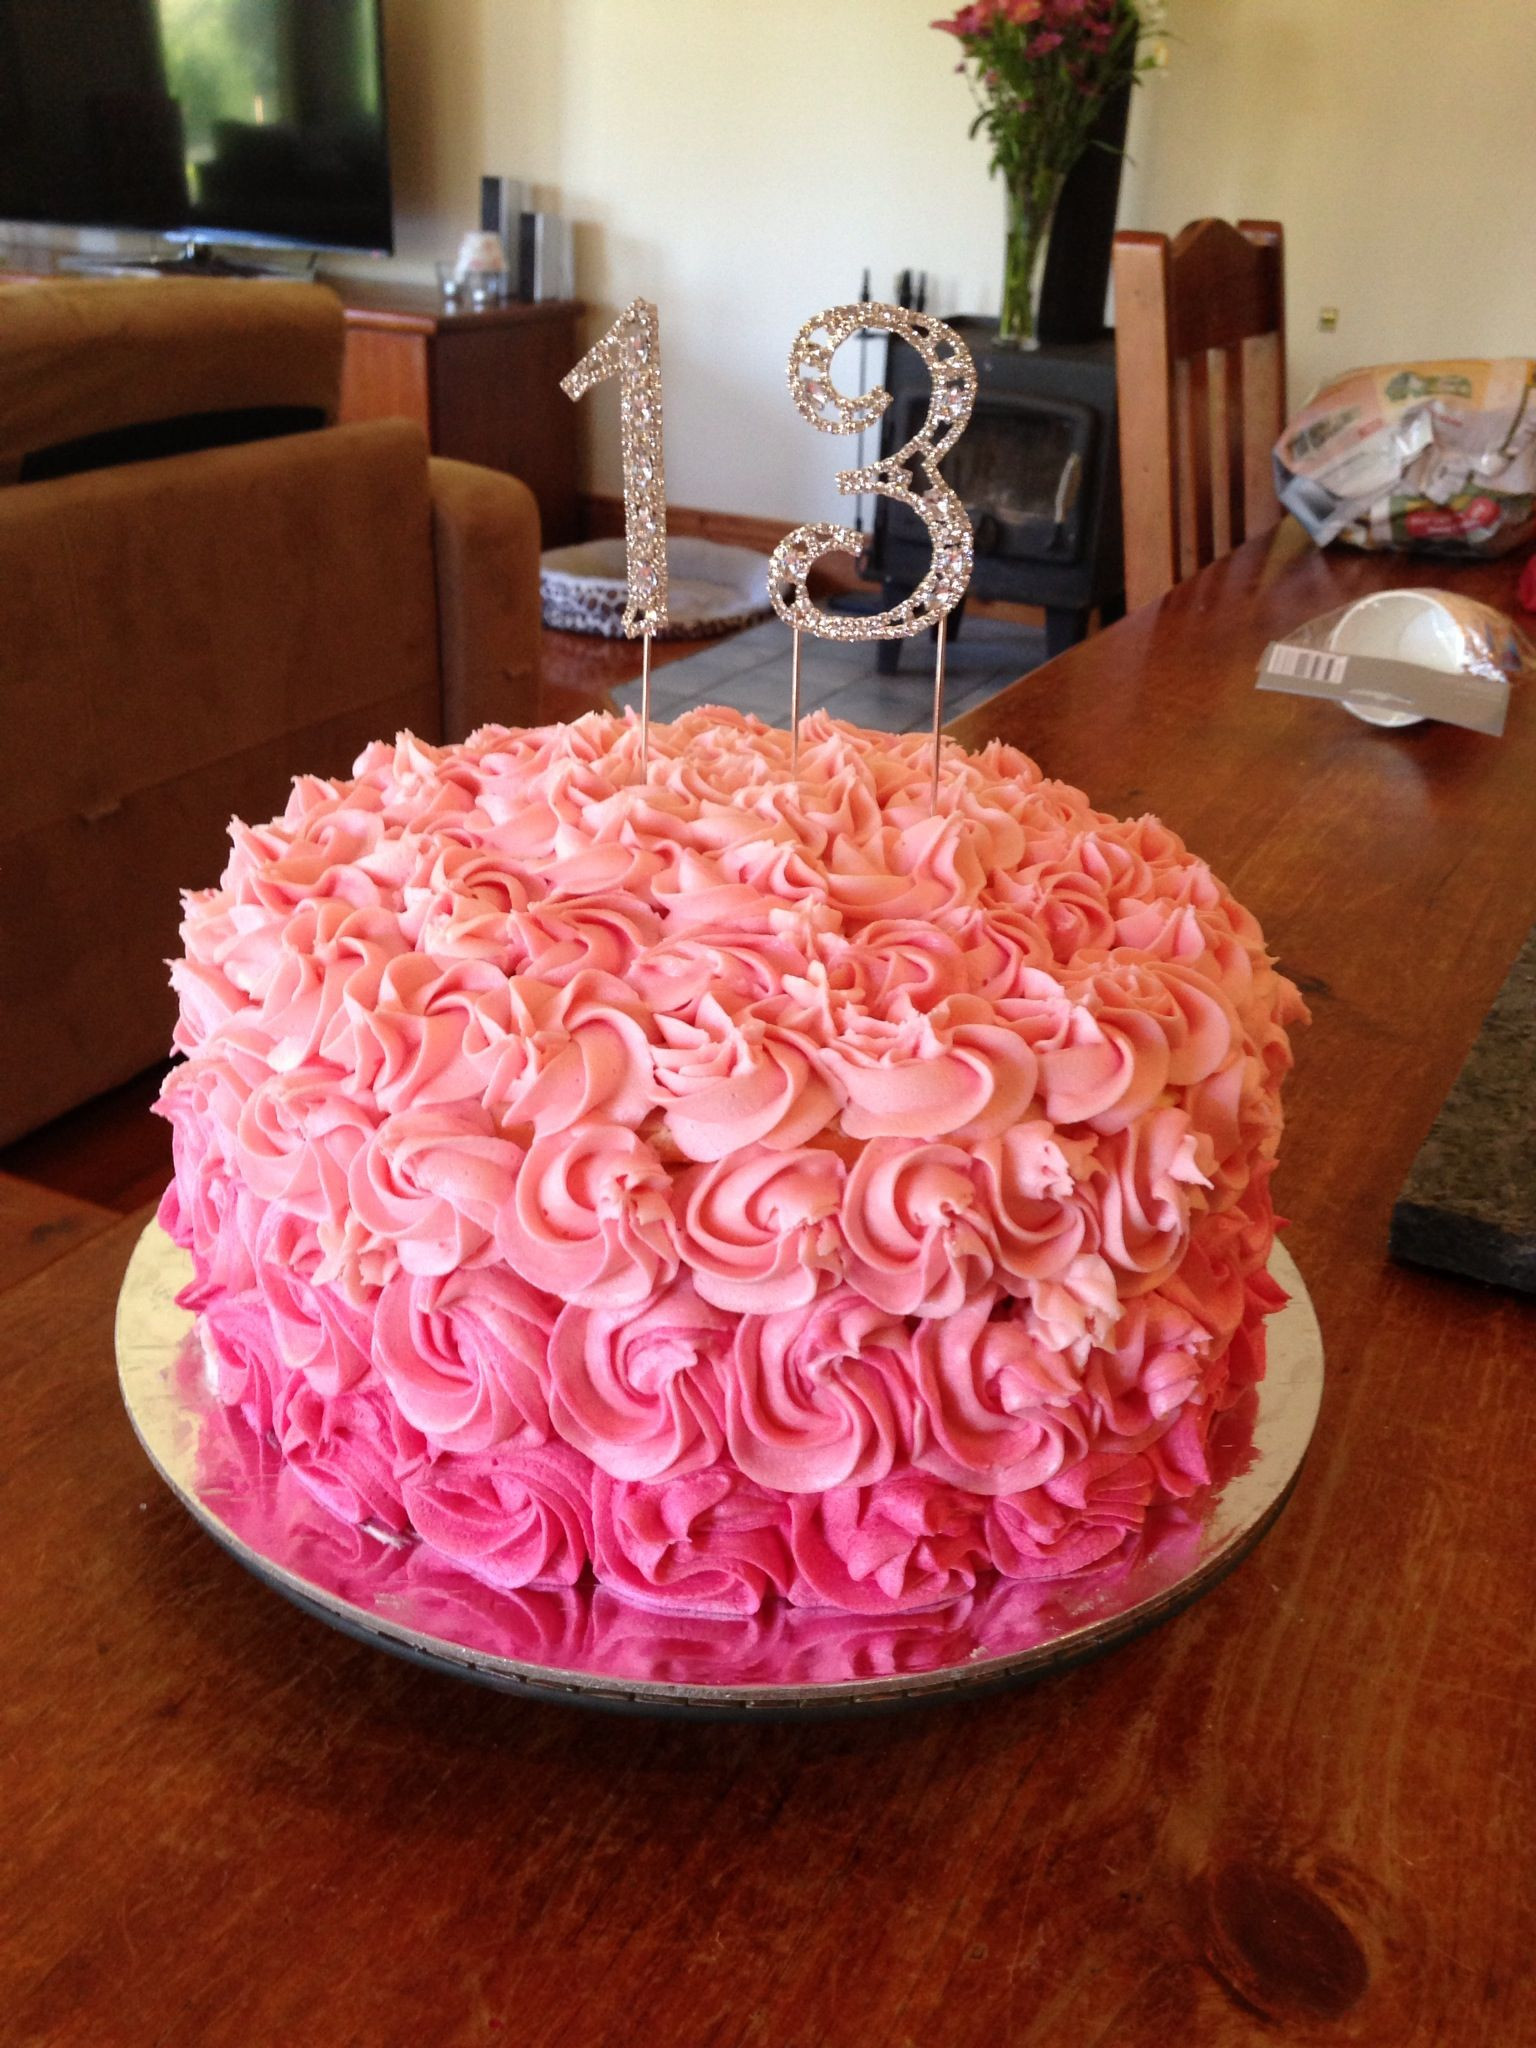 13th Birthday Cake Ideas
 Millie s 13th birthday cake My cakes Pinterest